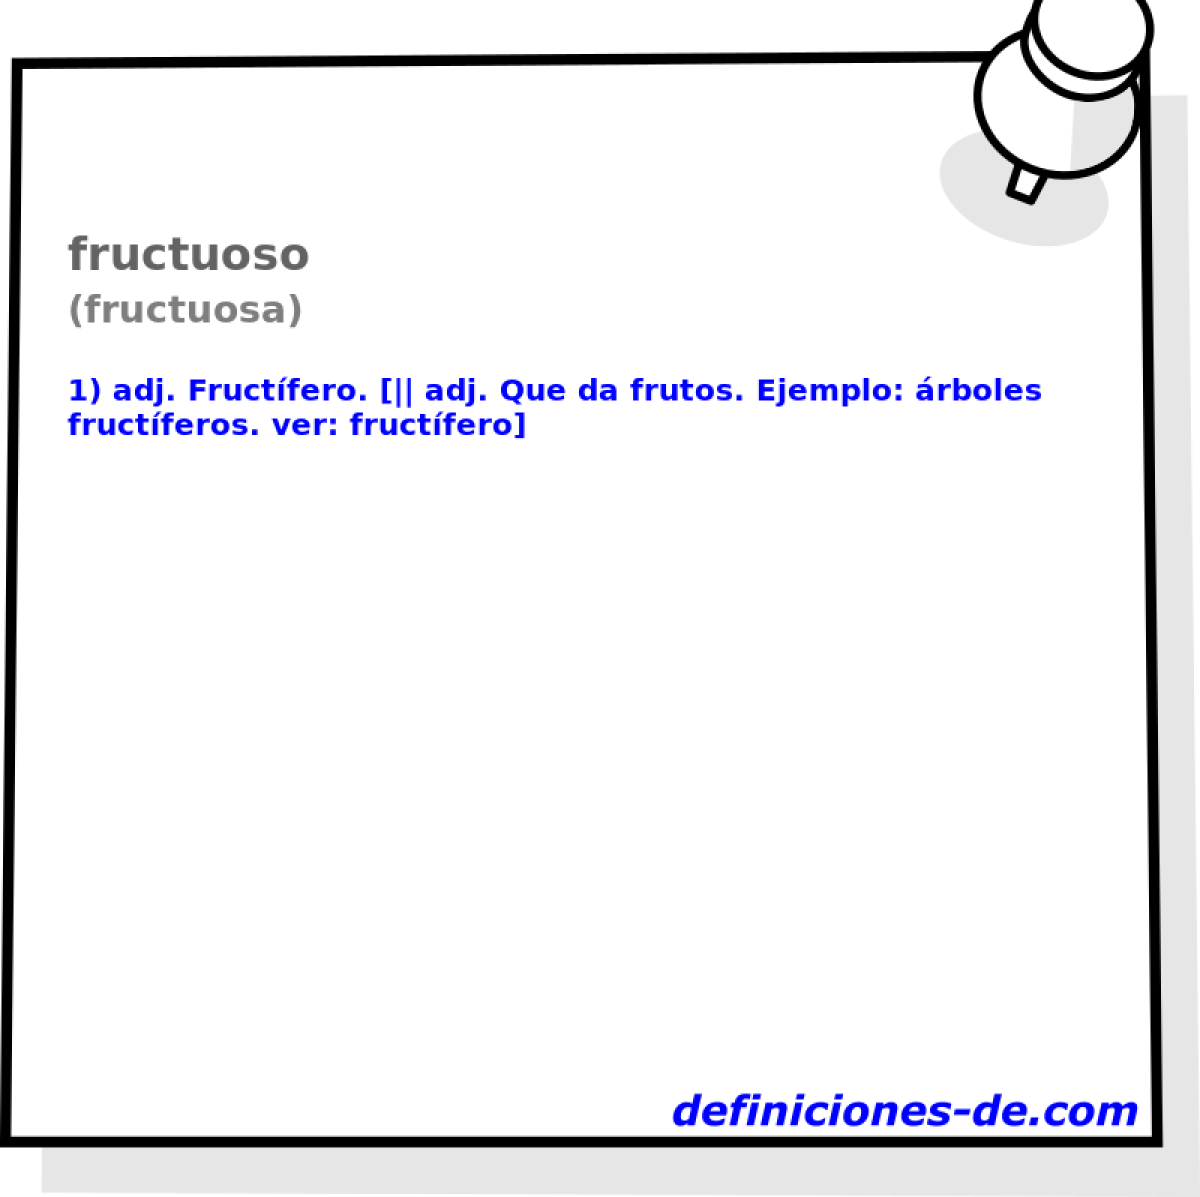 fructuoso (fructuosa)